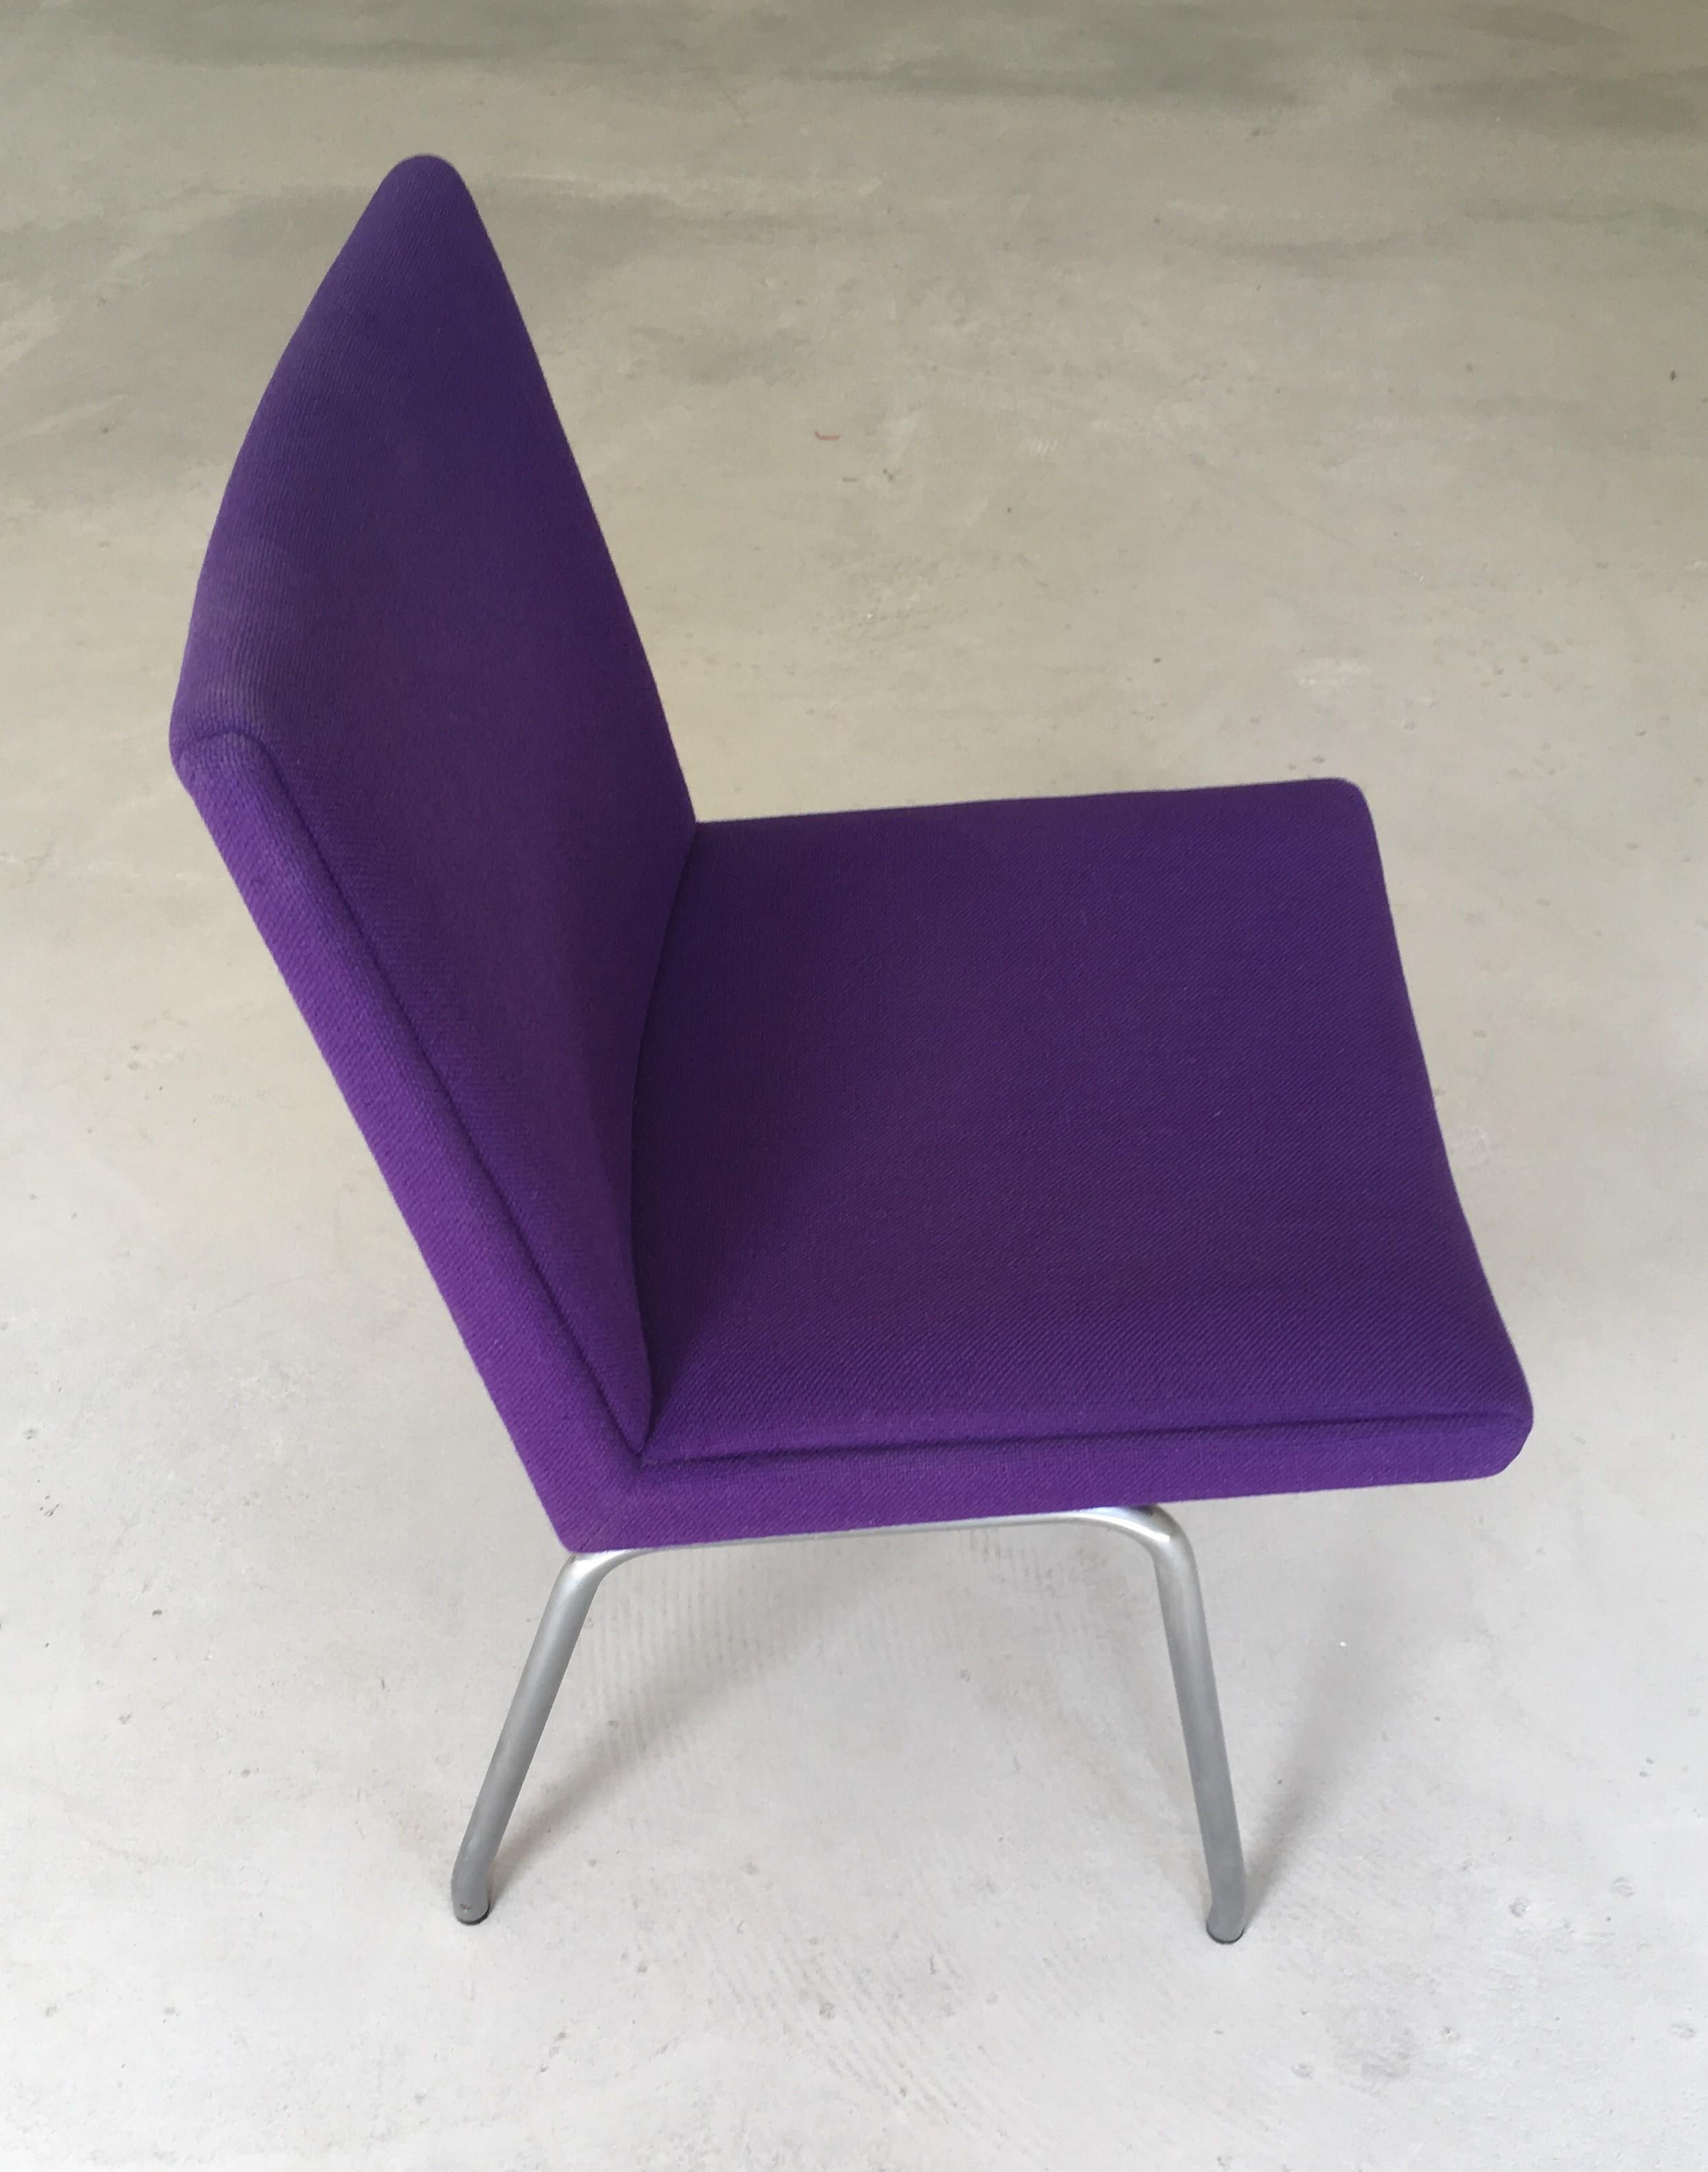 1960s Danish Hans J. Wegner Airport Chair, Reupholstered in Purple Fabric For Sale 2